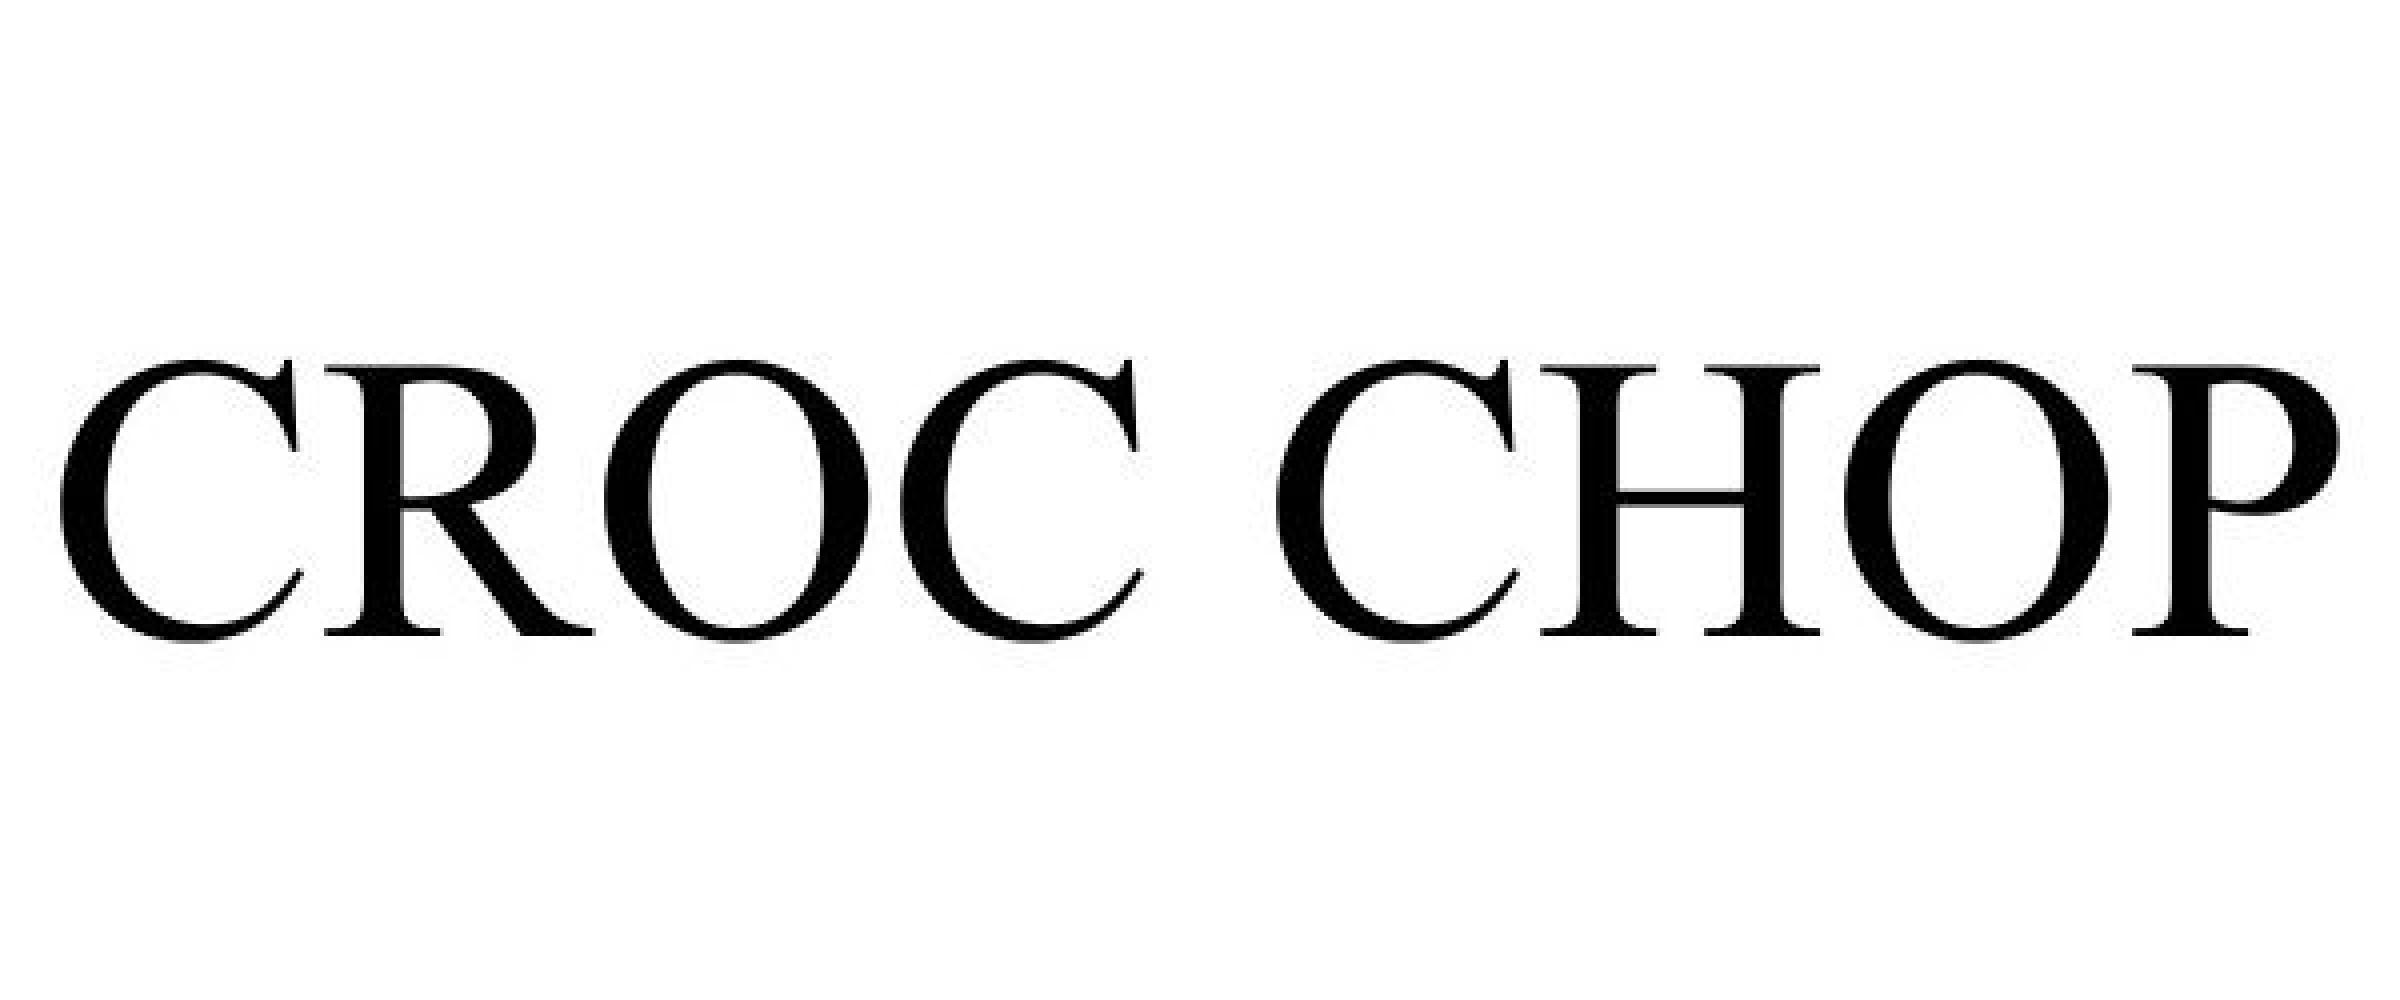 CROC CHOP - OTOTO Design Ltd Trademark Registration